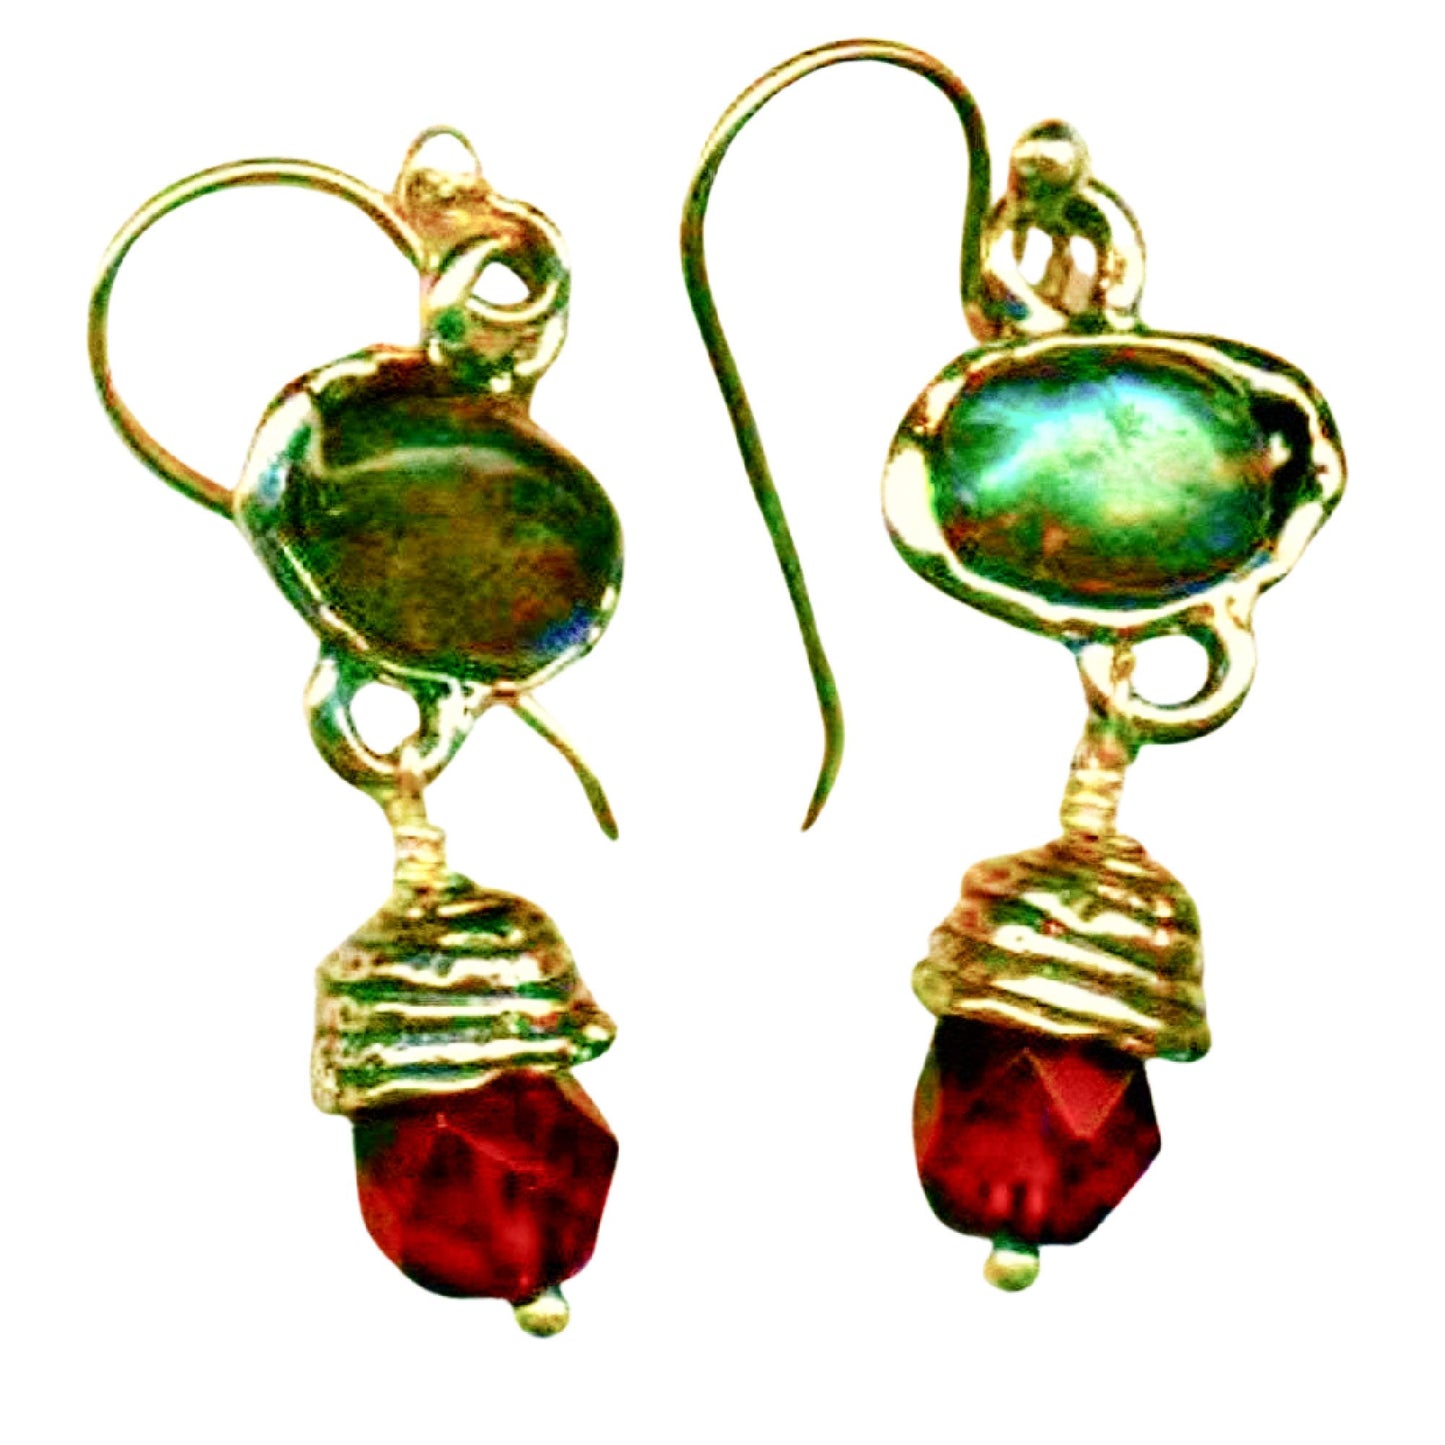 Bluenoemi Earrings Roman Glass silver pomegranate dangle earrings / red / dangling Sterling Silver Earrings,  Israeli Jewelry, Garnet and Crystal, gift for her